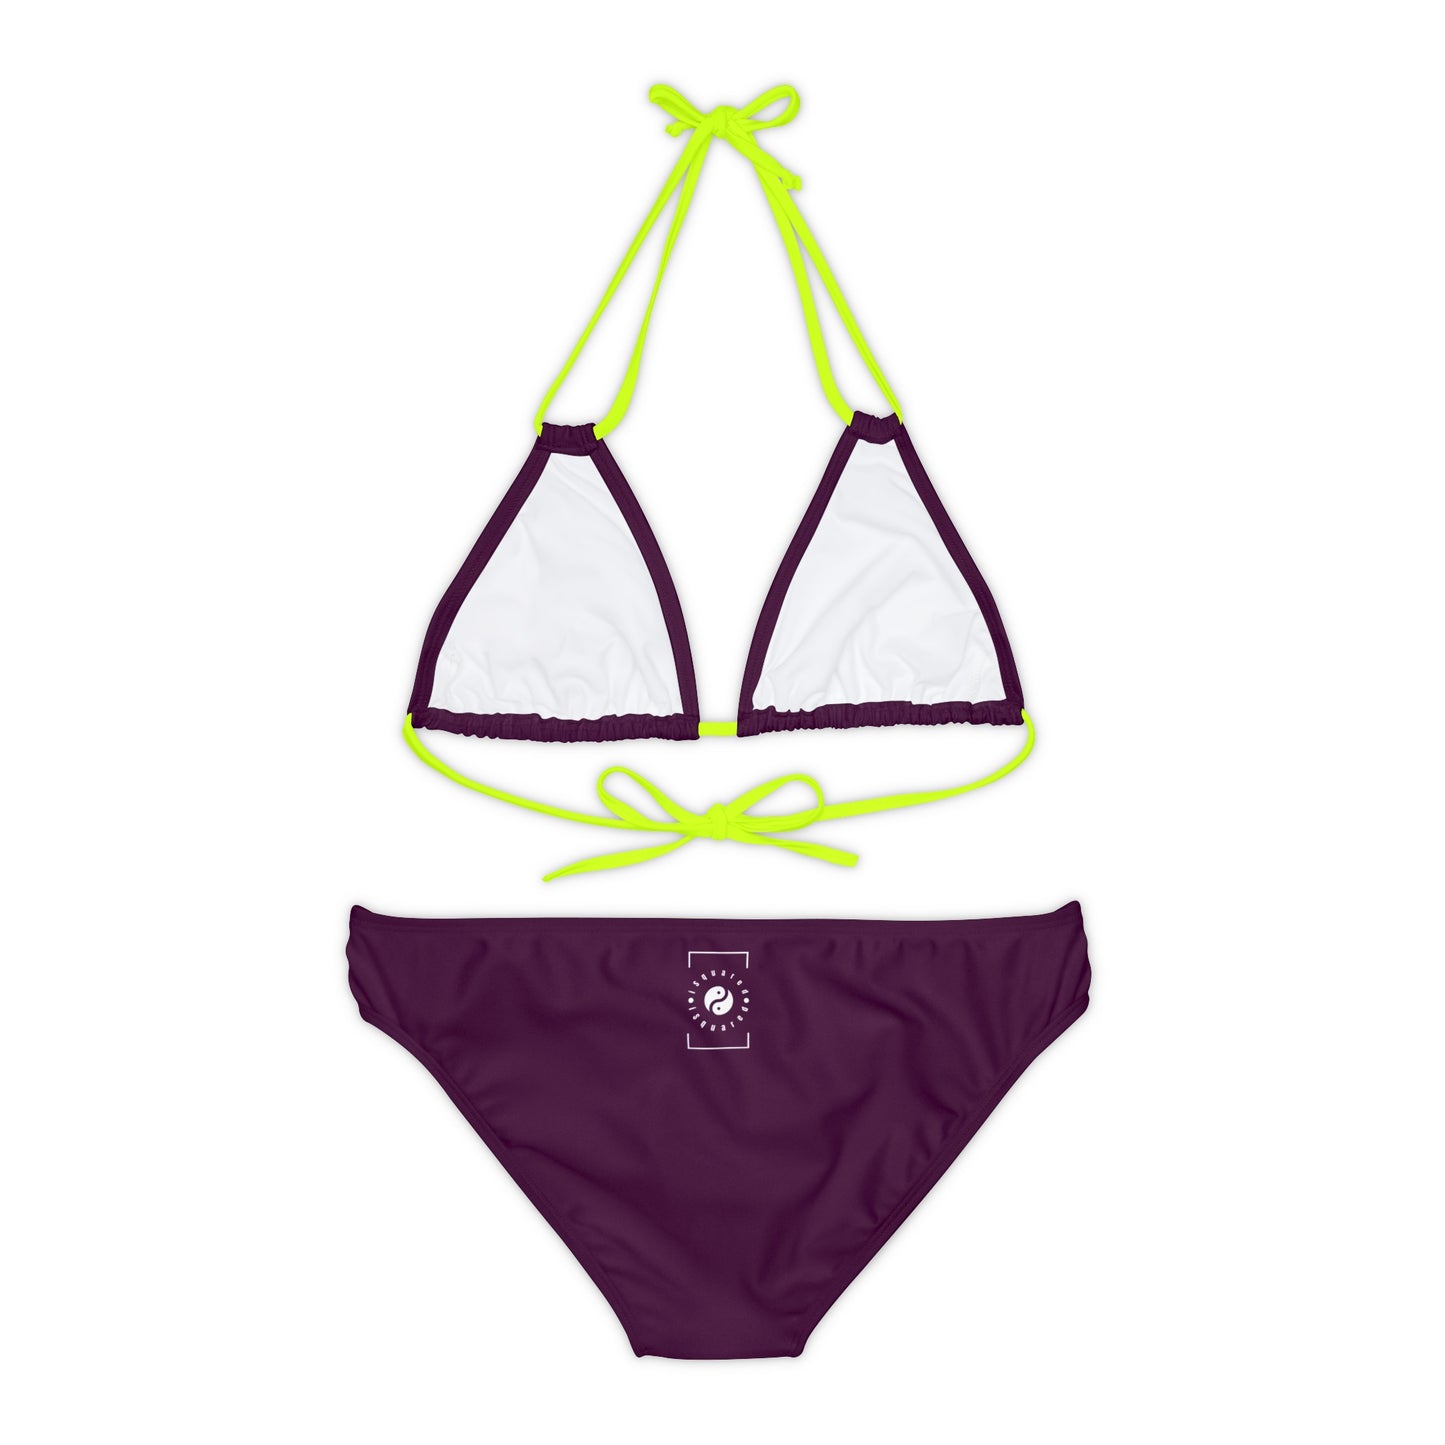 Deep Burgundy - Lace-up Bikini Set